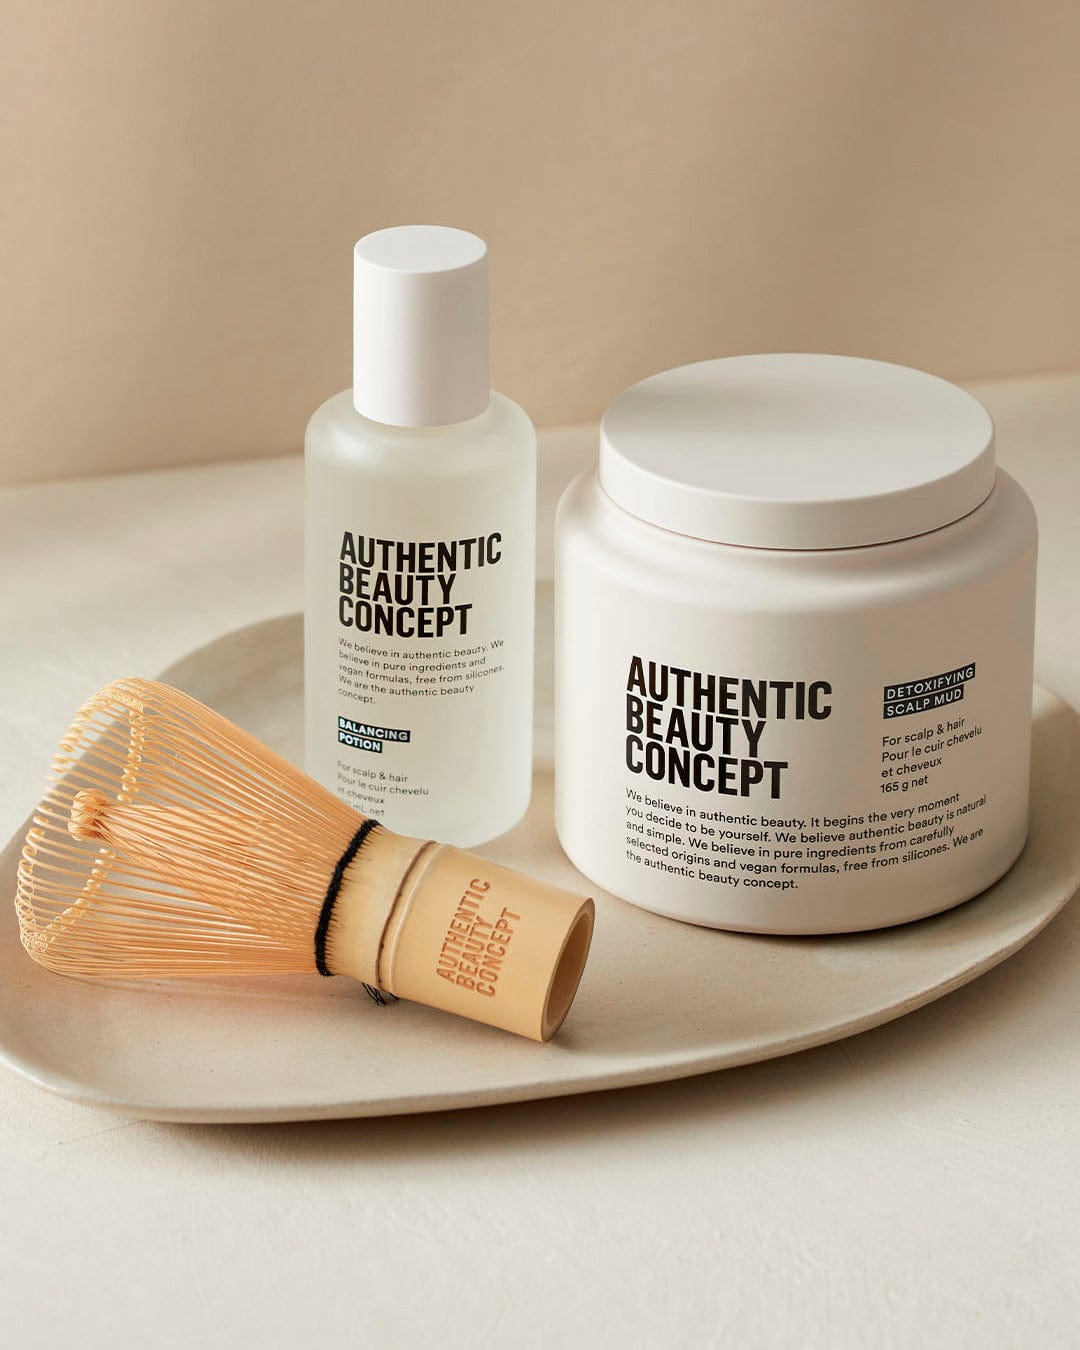 Authentic Beauty Concept Tratamiento Detoxifying Scalp Mud TRT 165g Roberta Beauty Club Tienda Online Productos de Peluqueria